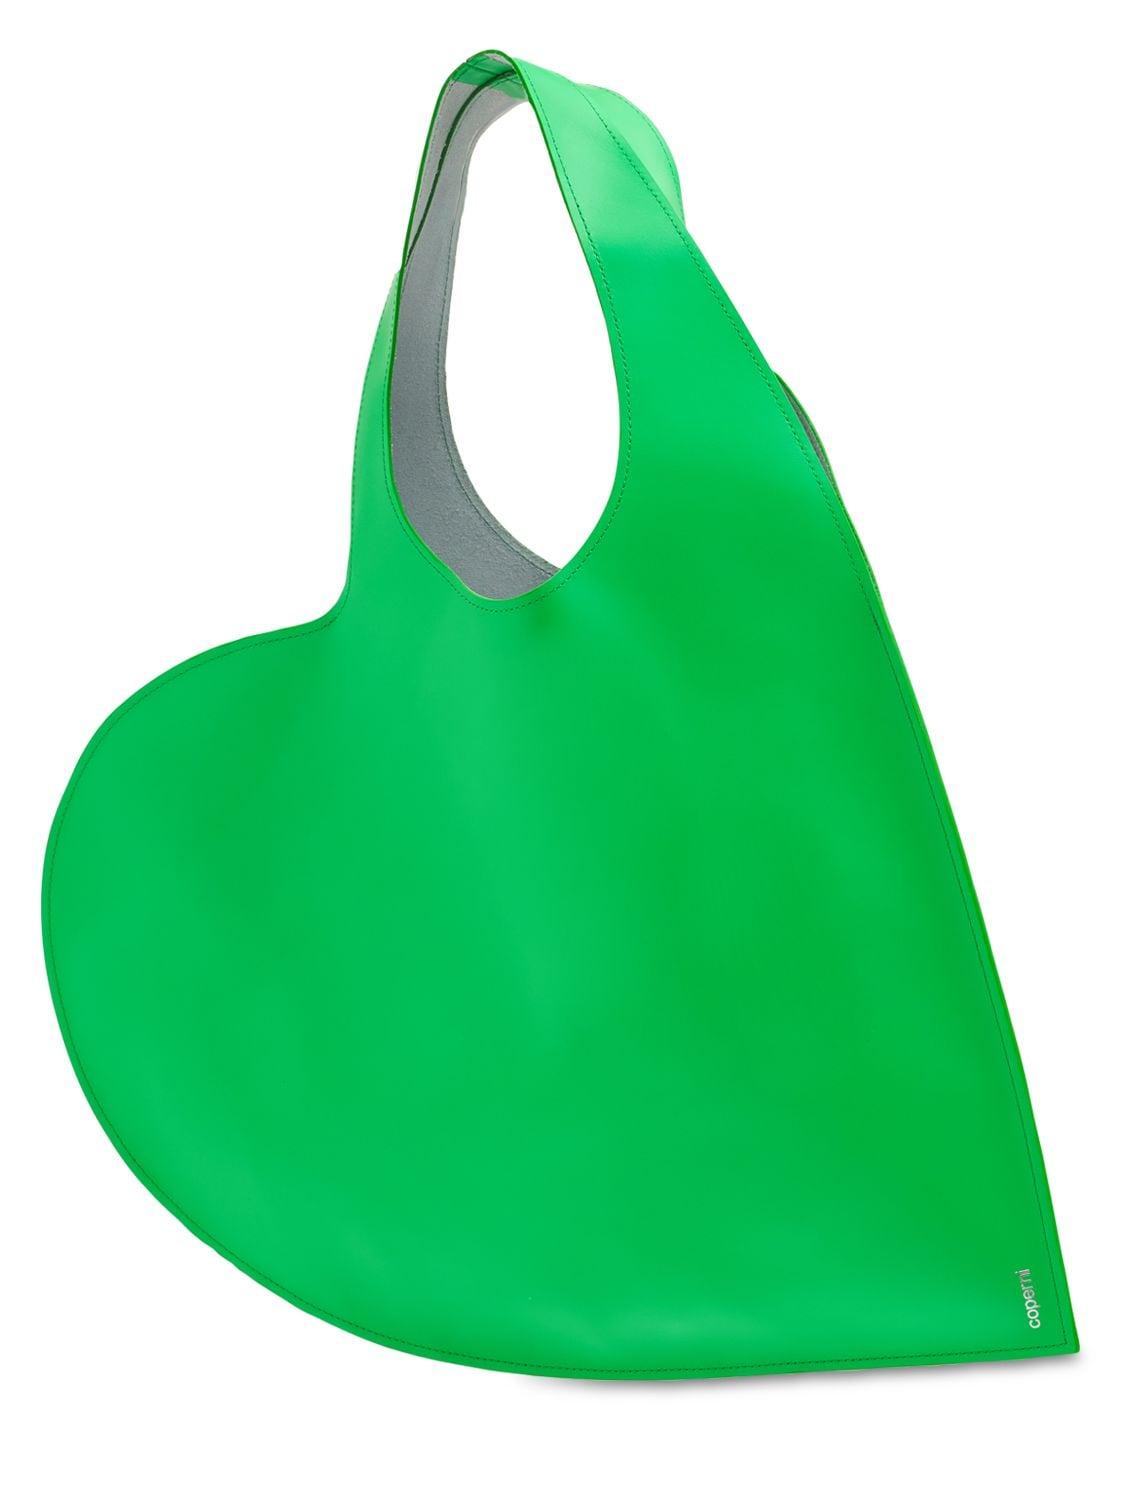 Coperni Heart Faux Leather Shoulder Bag in Bright Green (Green) - Lyst